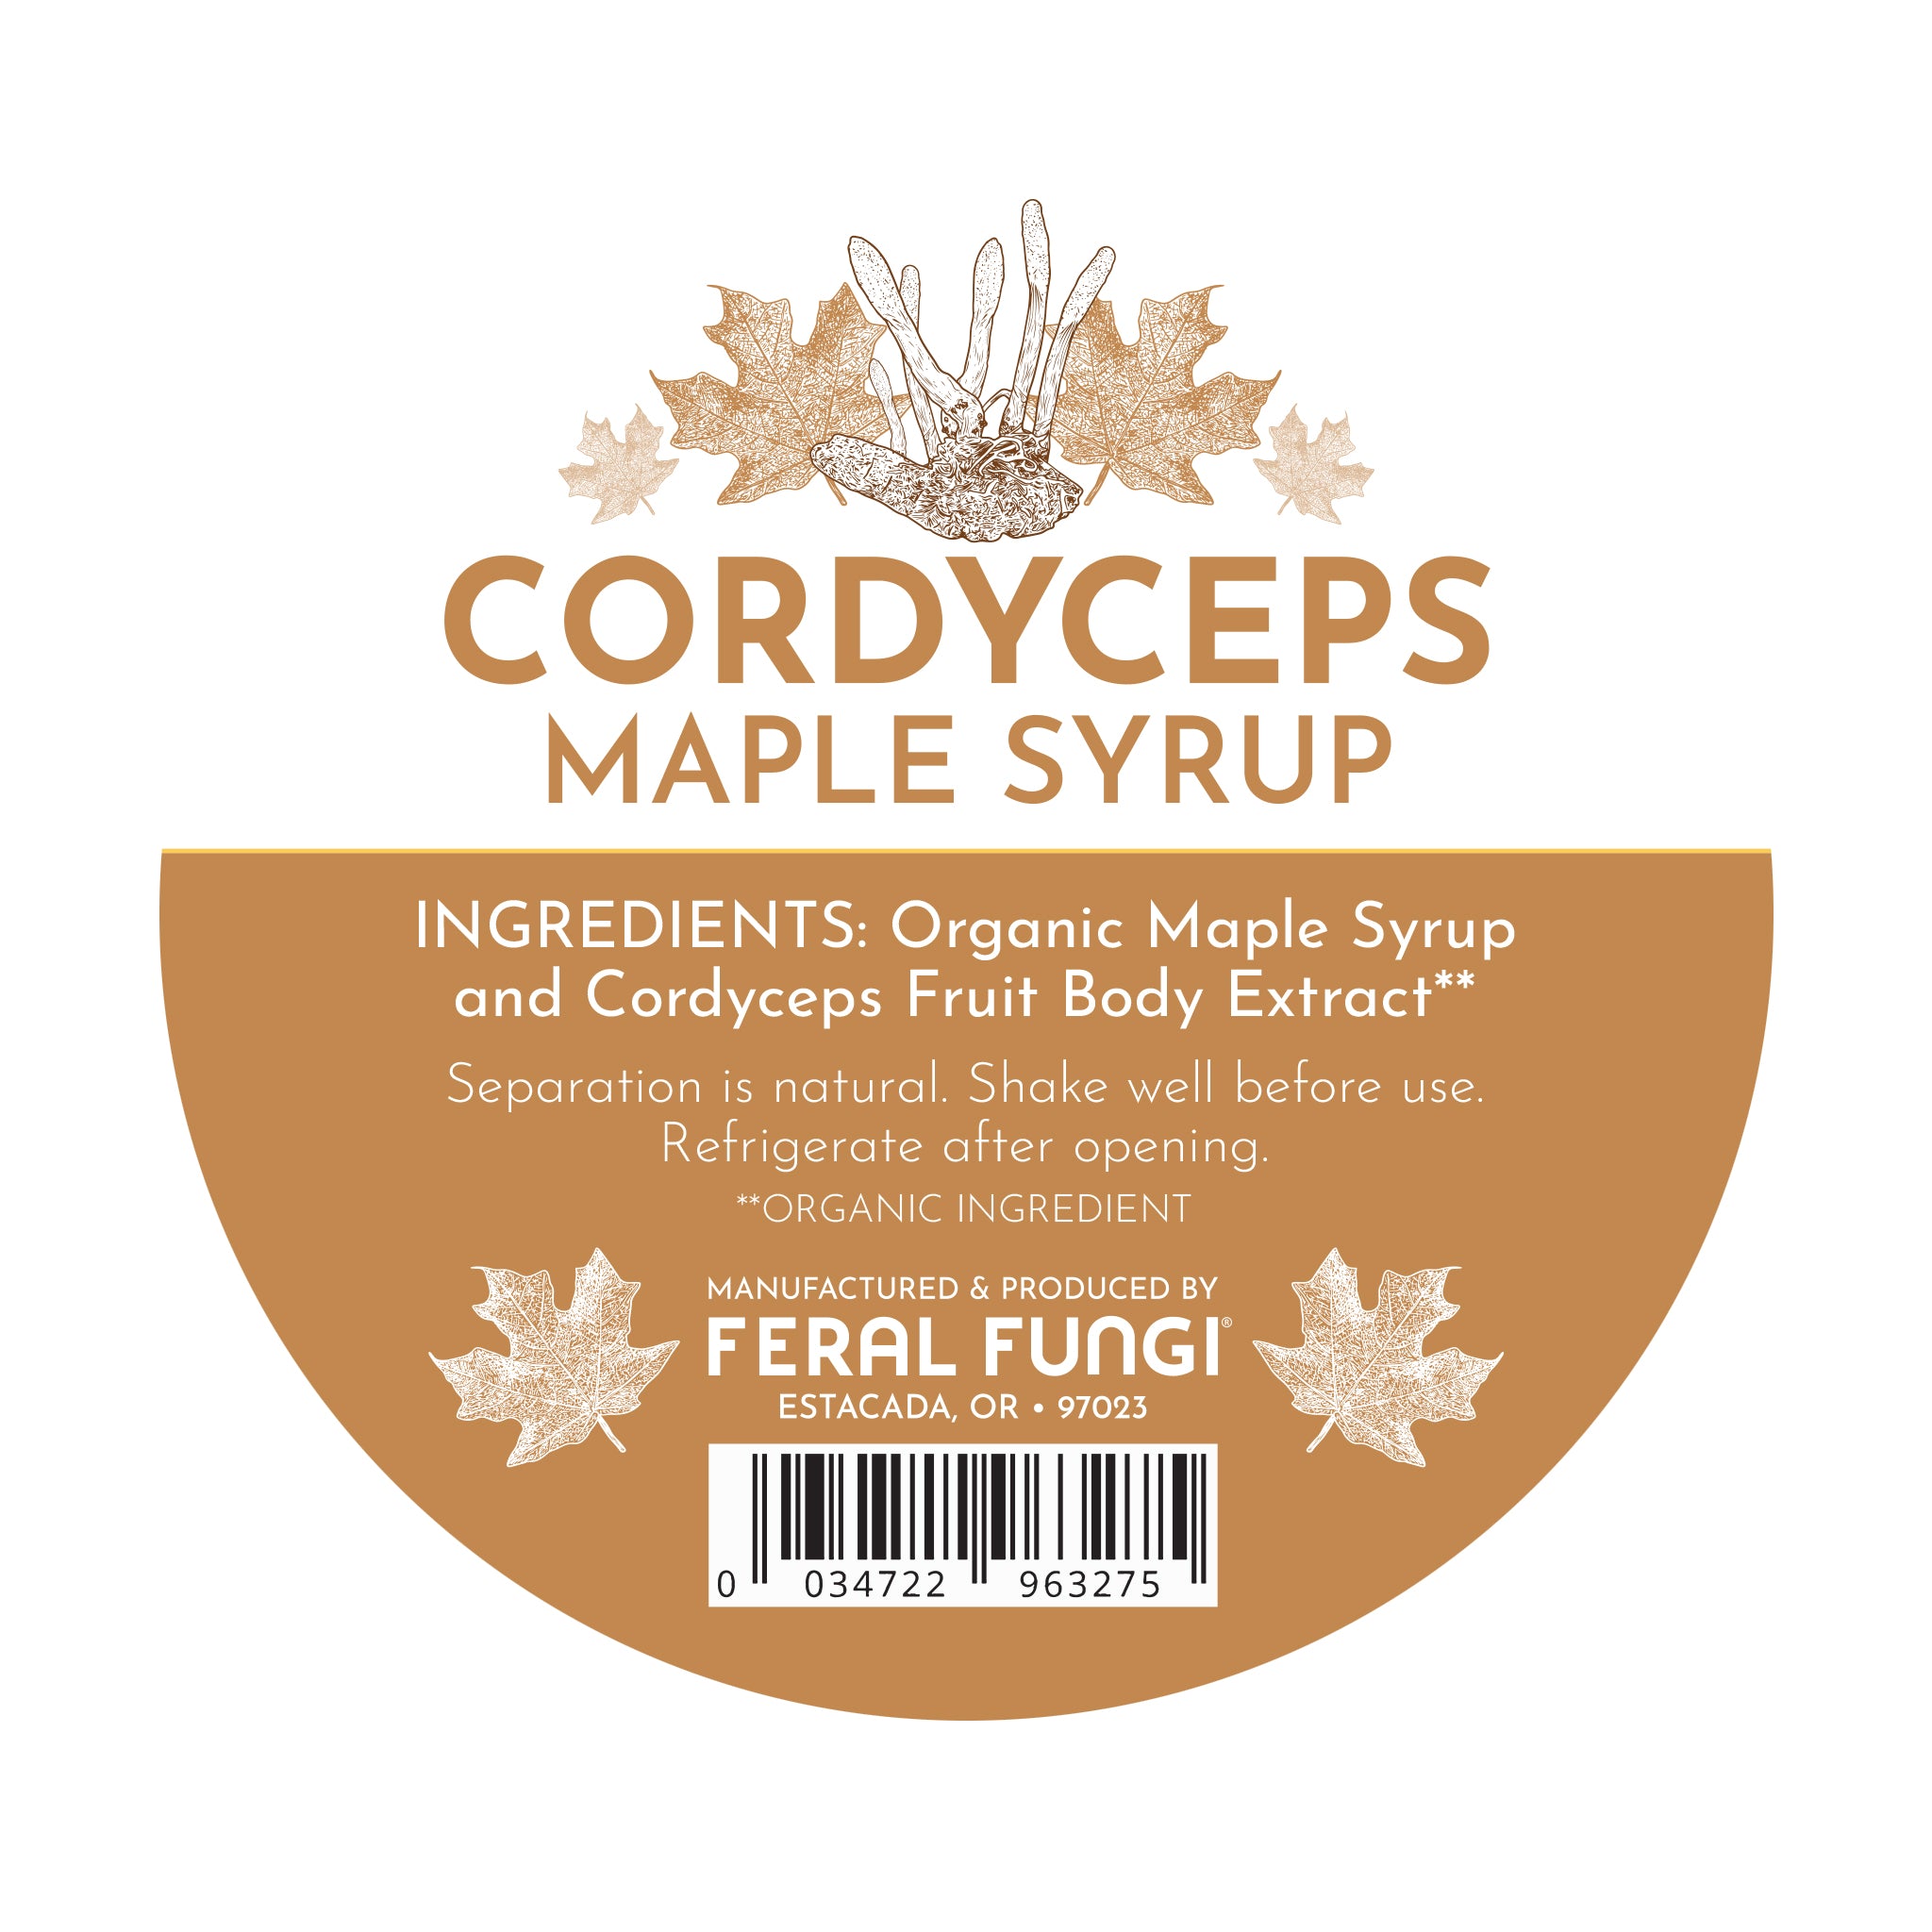 Cordyceps Maple Syrup